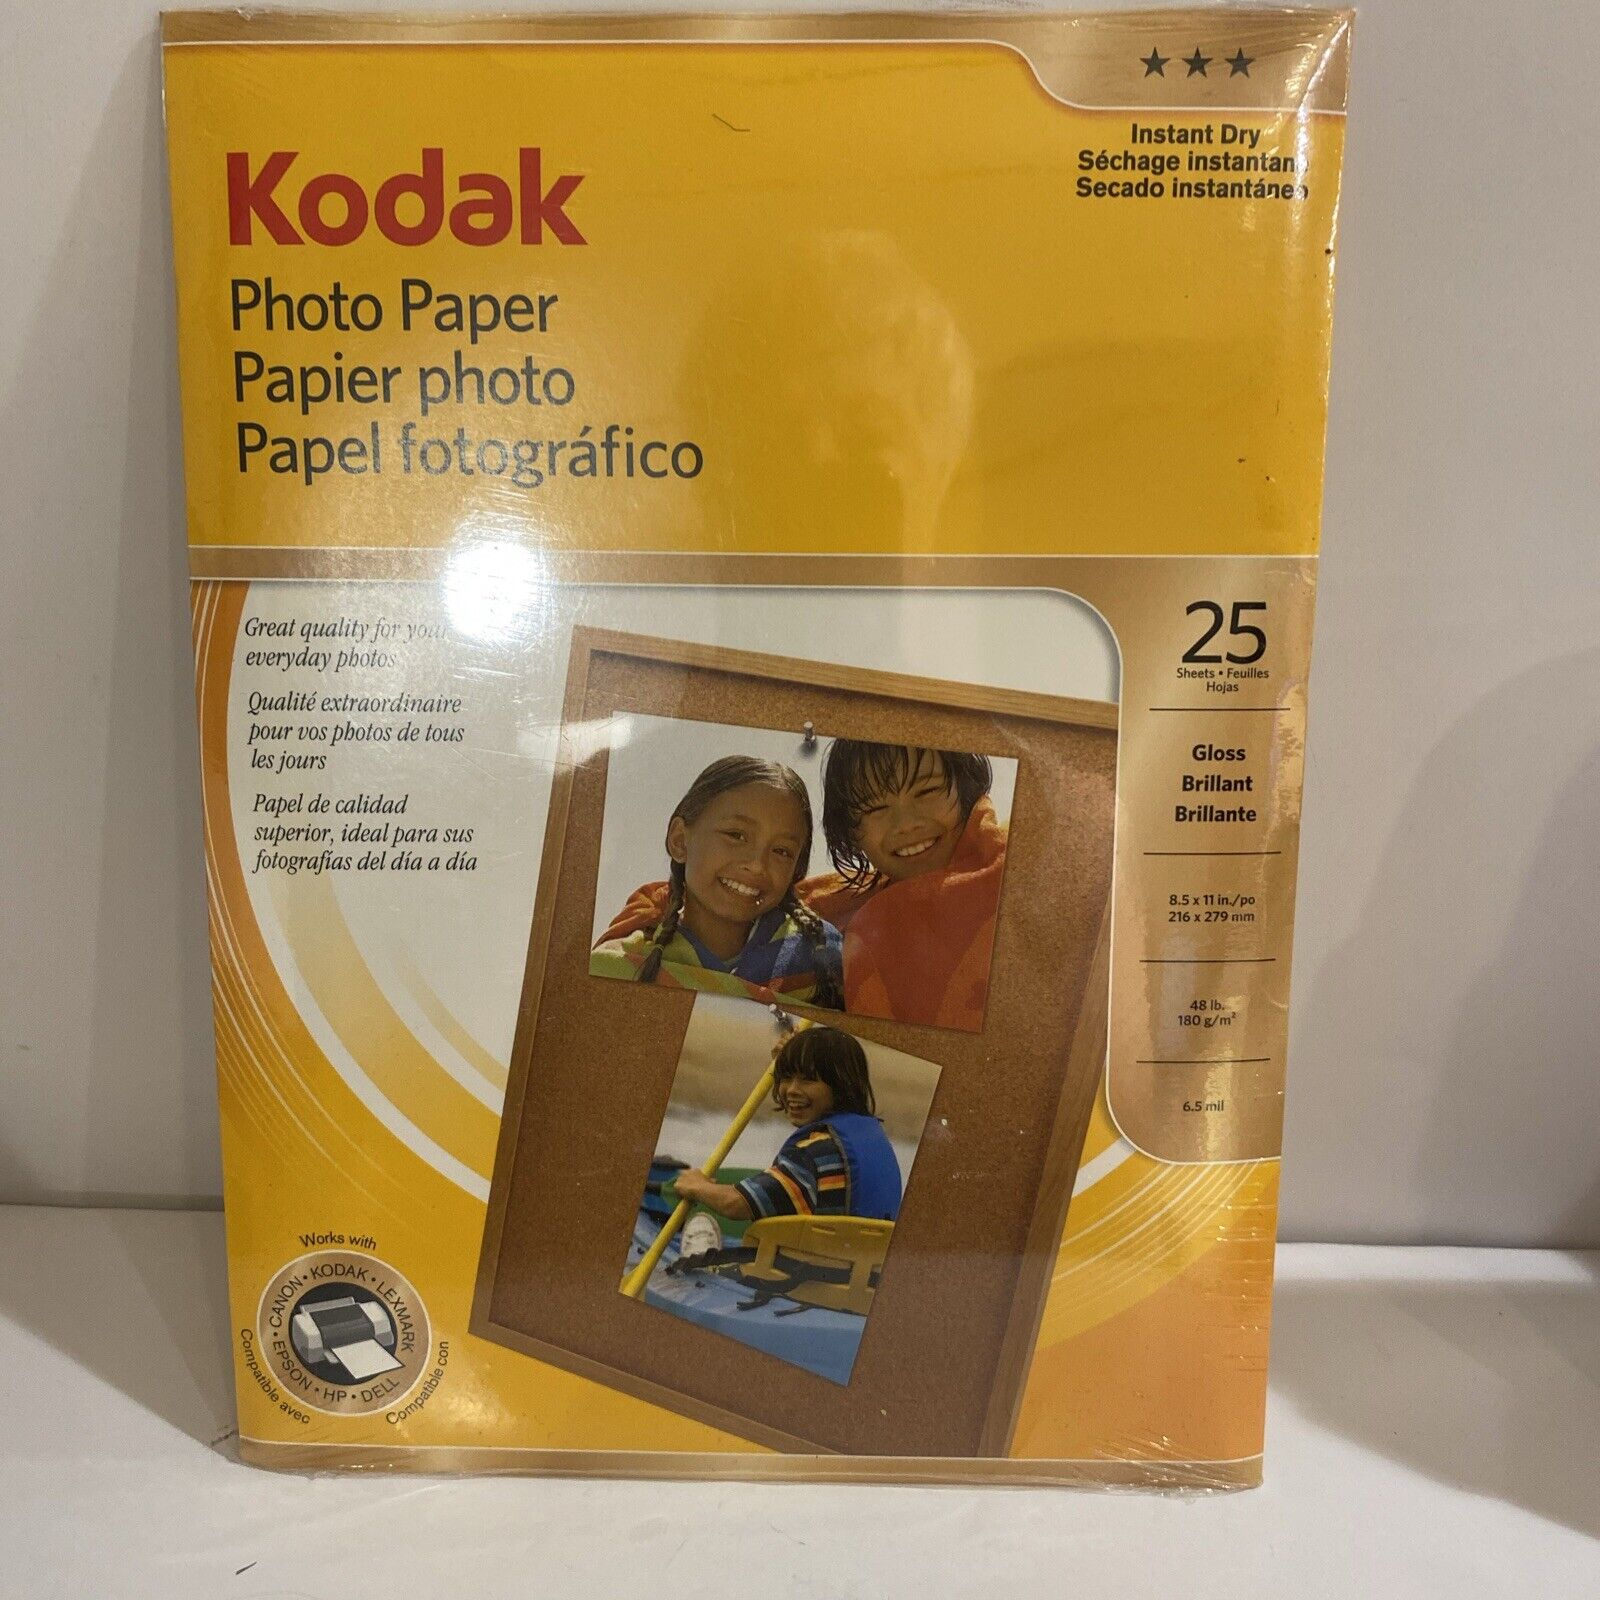 Photo Paper Kodak Gloss Photo Paper 8.5 x 11 Instant Dry 25 Sheets NEW JU